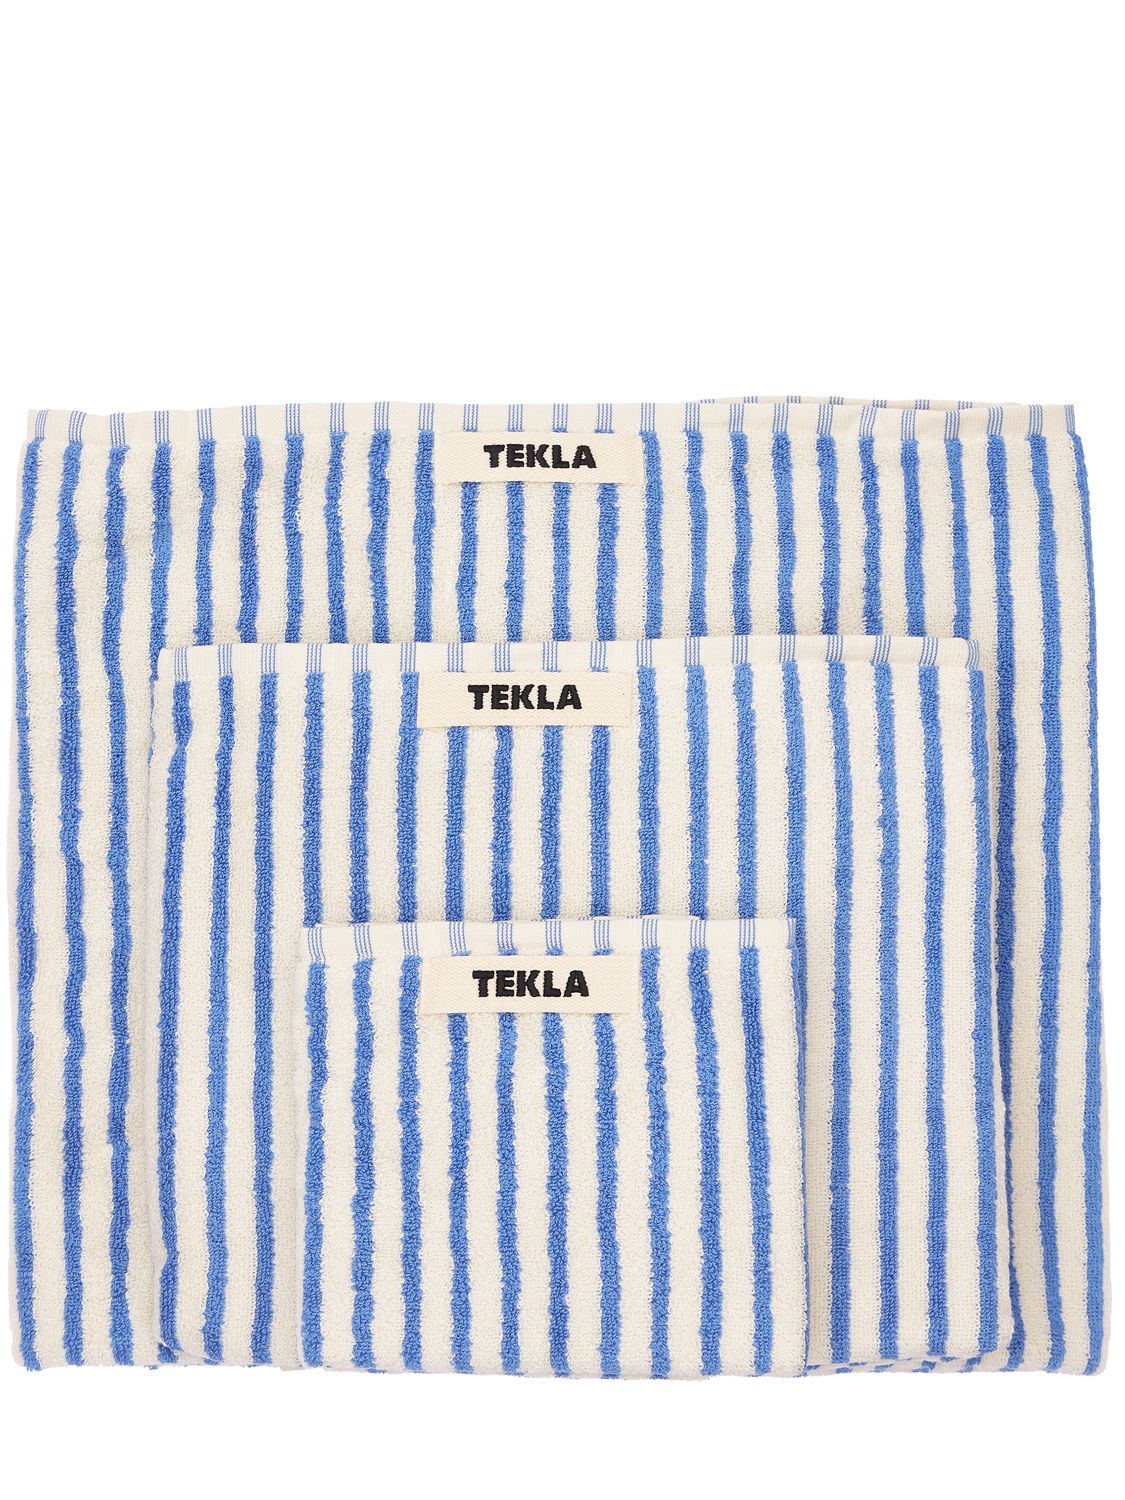 TEKLA organic cotton towel (30cmx30cm) - Green